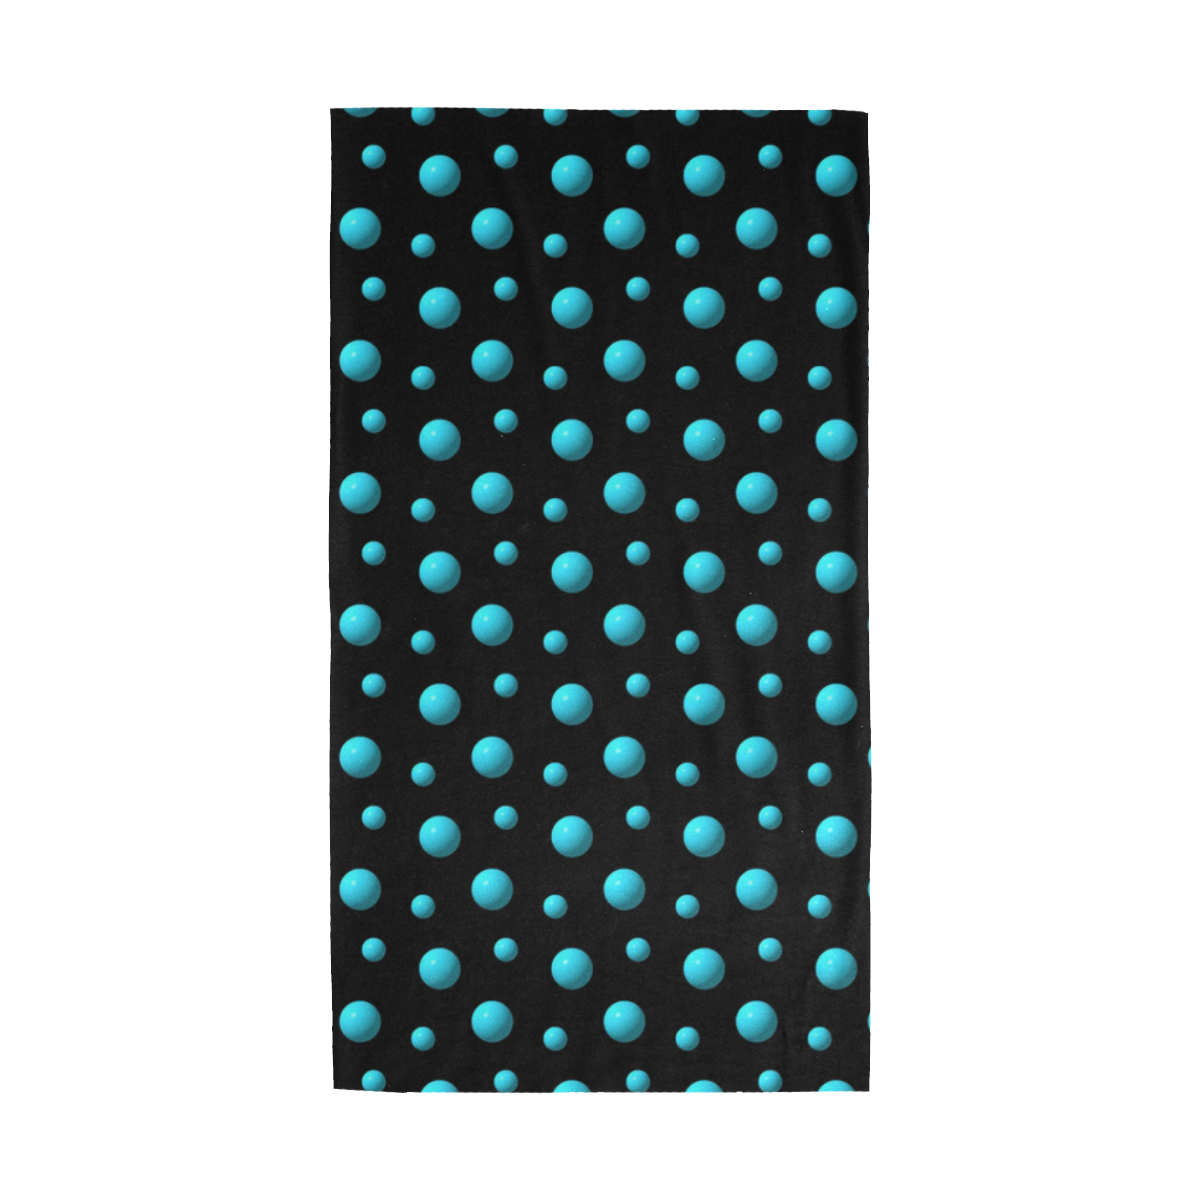 Terrific Turquoise Polka Dots on Black Multifunctional Headwear